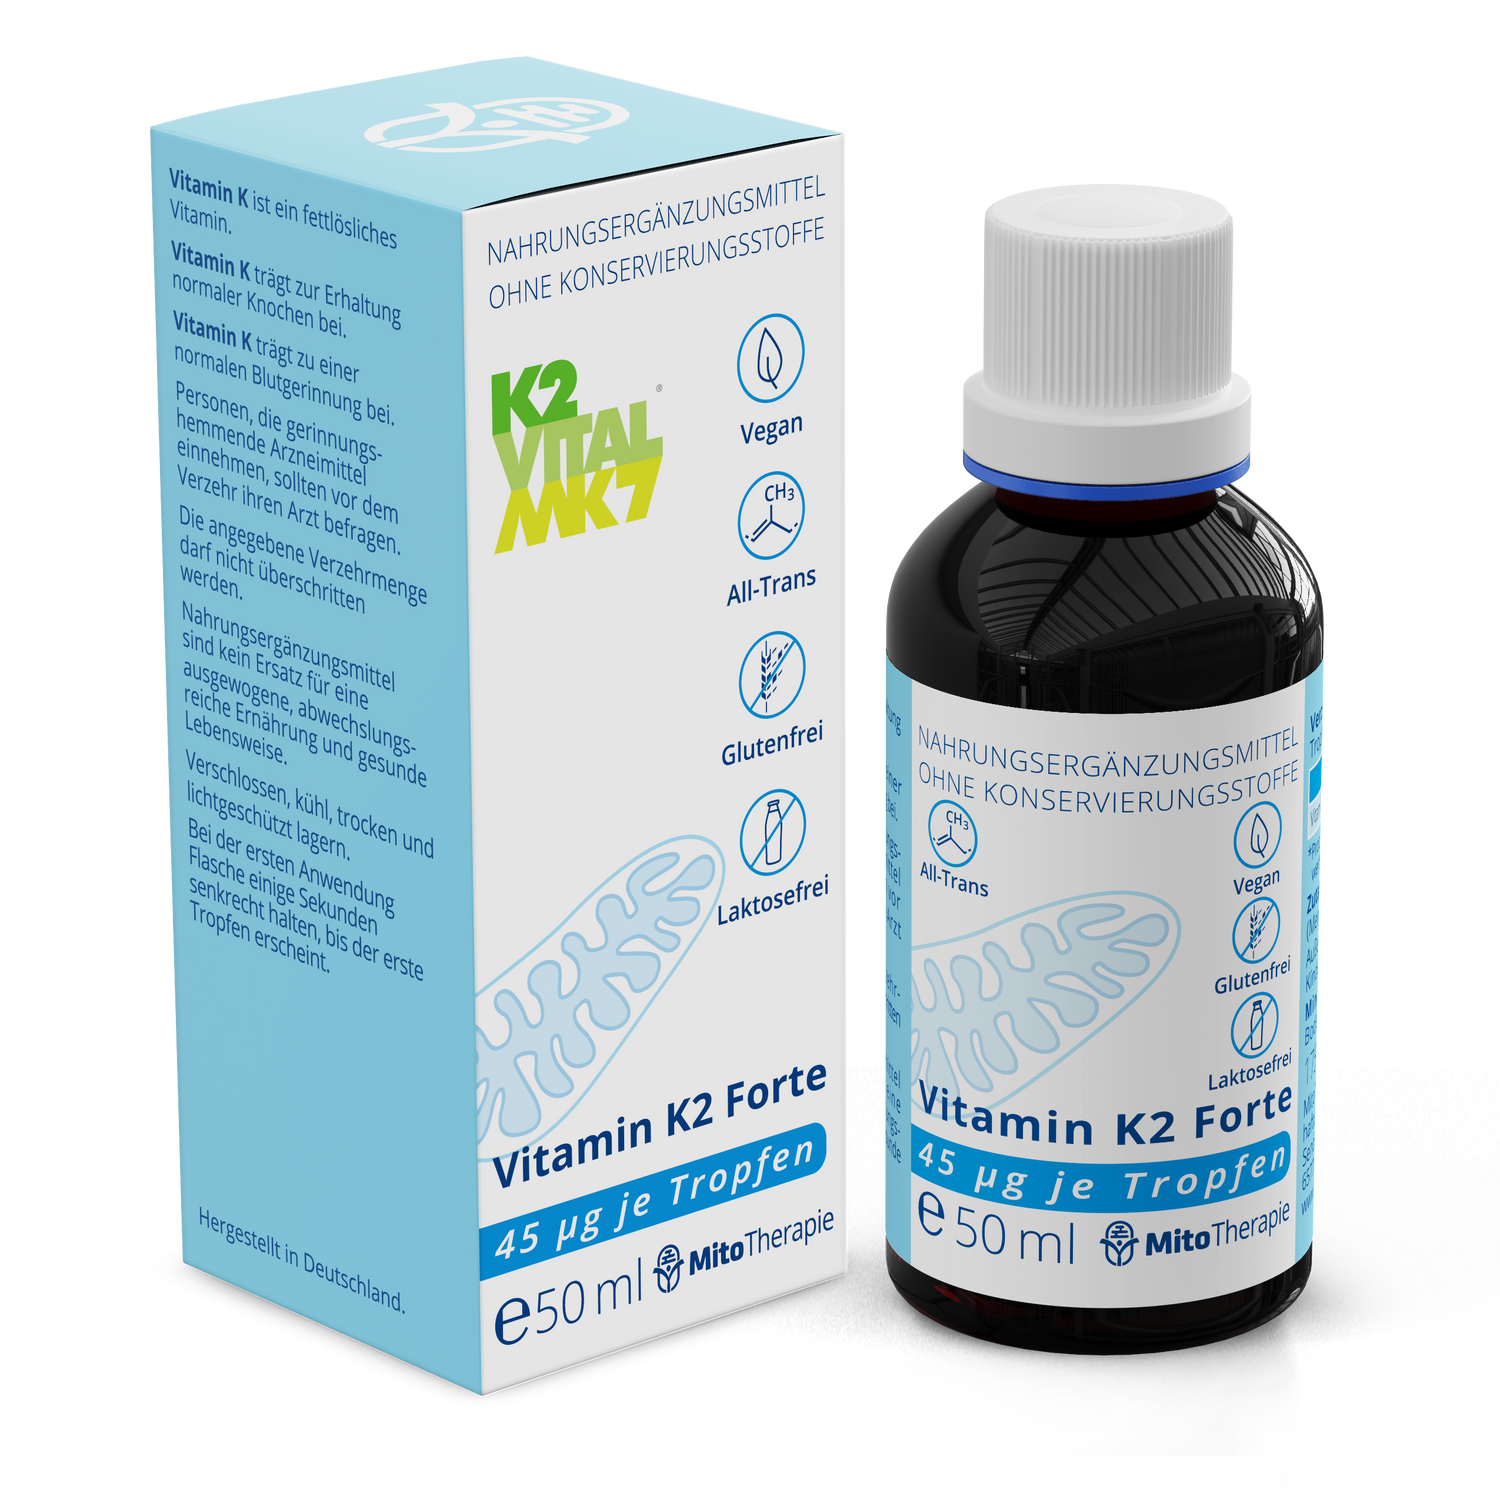 Vitamin K2 Forte – 45 µg je Tropfen – 1750 Tropfen je Flasche – Menaquinon-7 (K2VITAL®) gelöst in 50 ml MCT-Öl aus Kokos